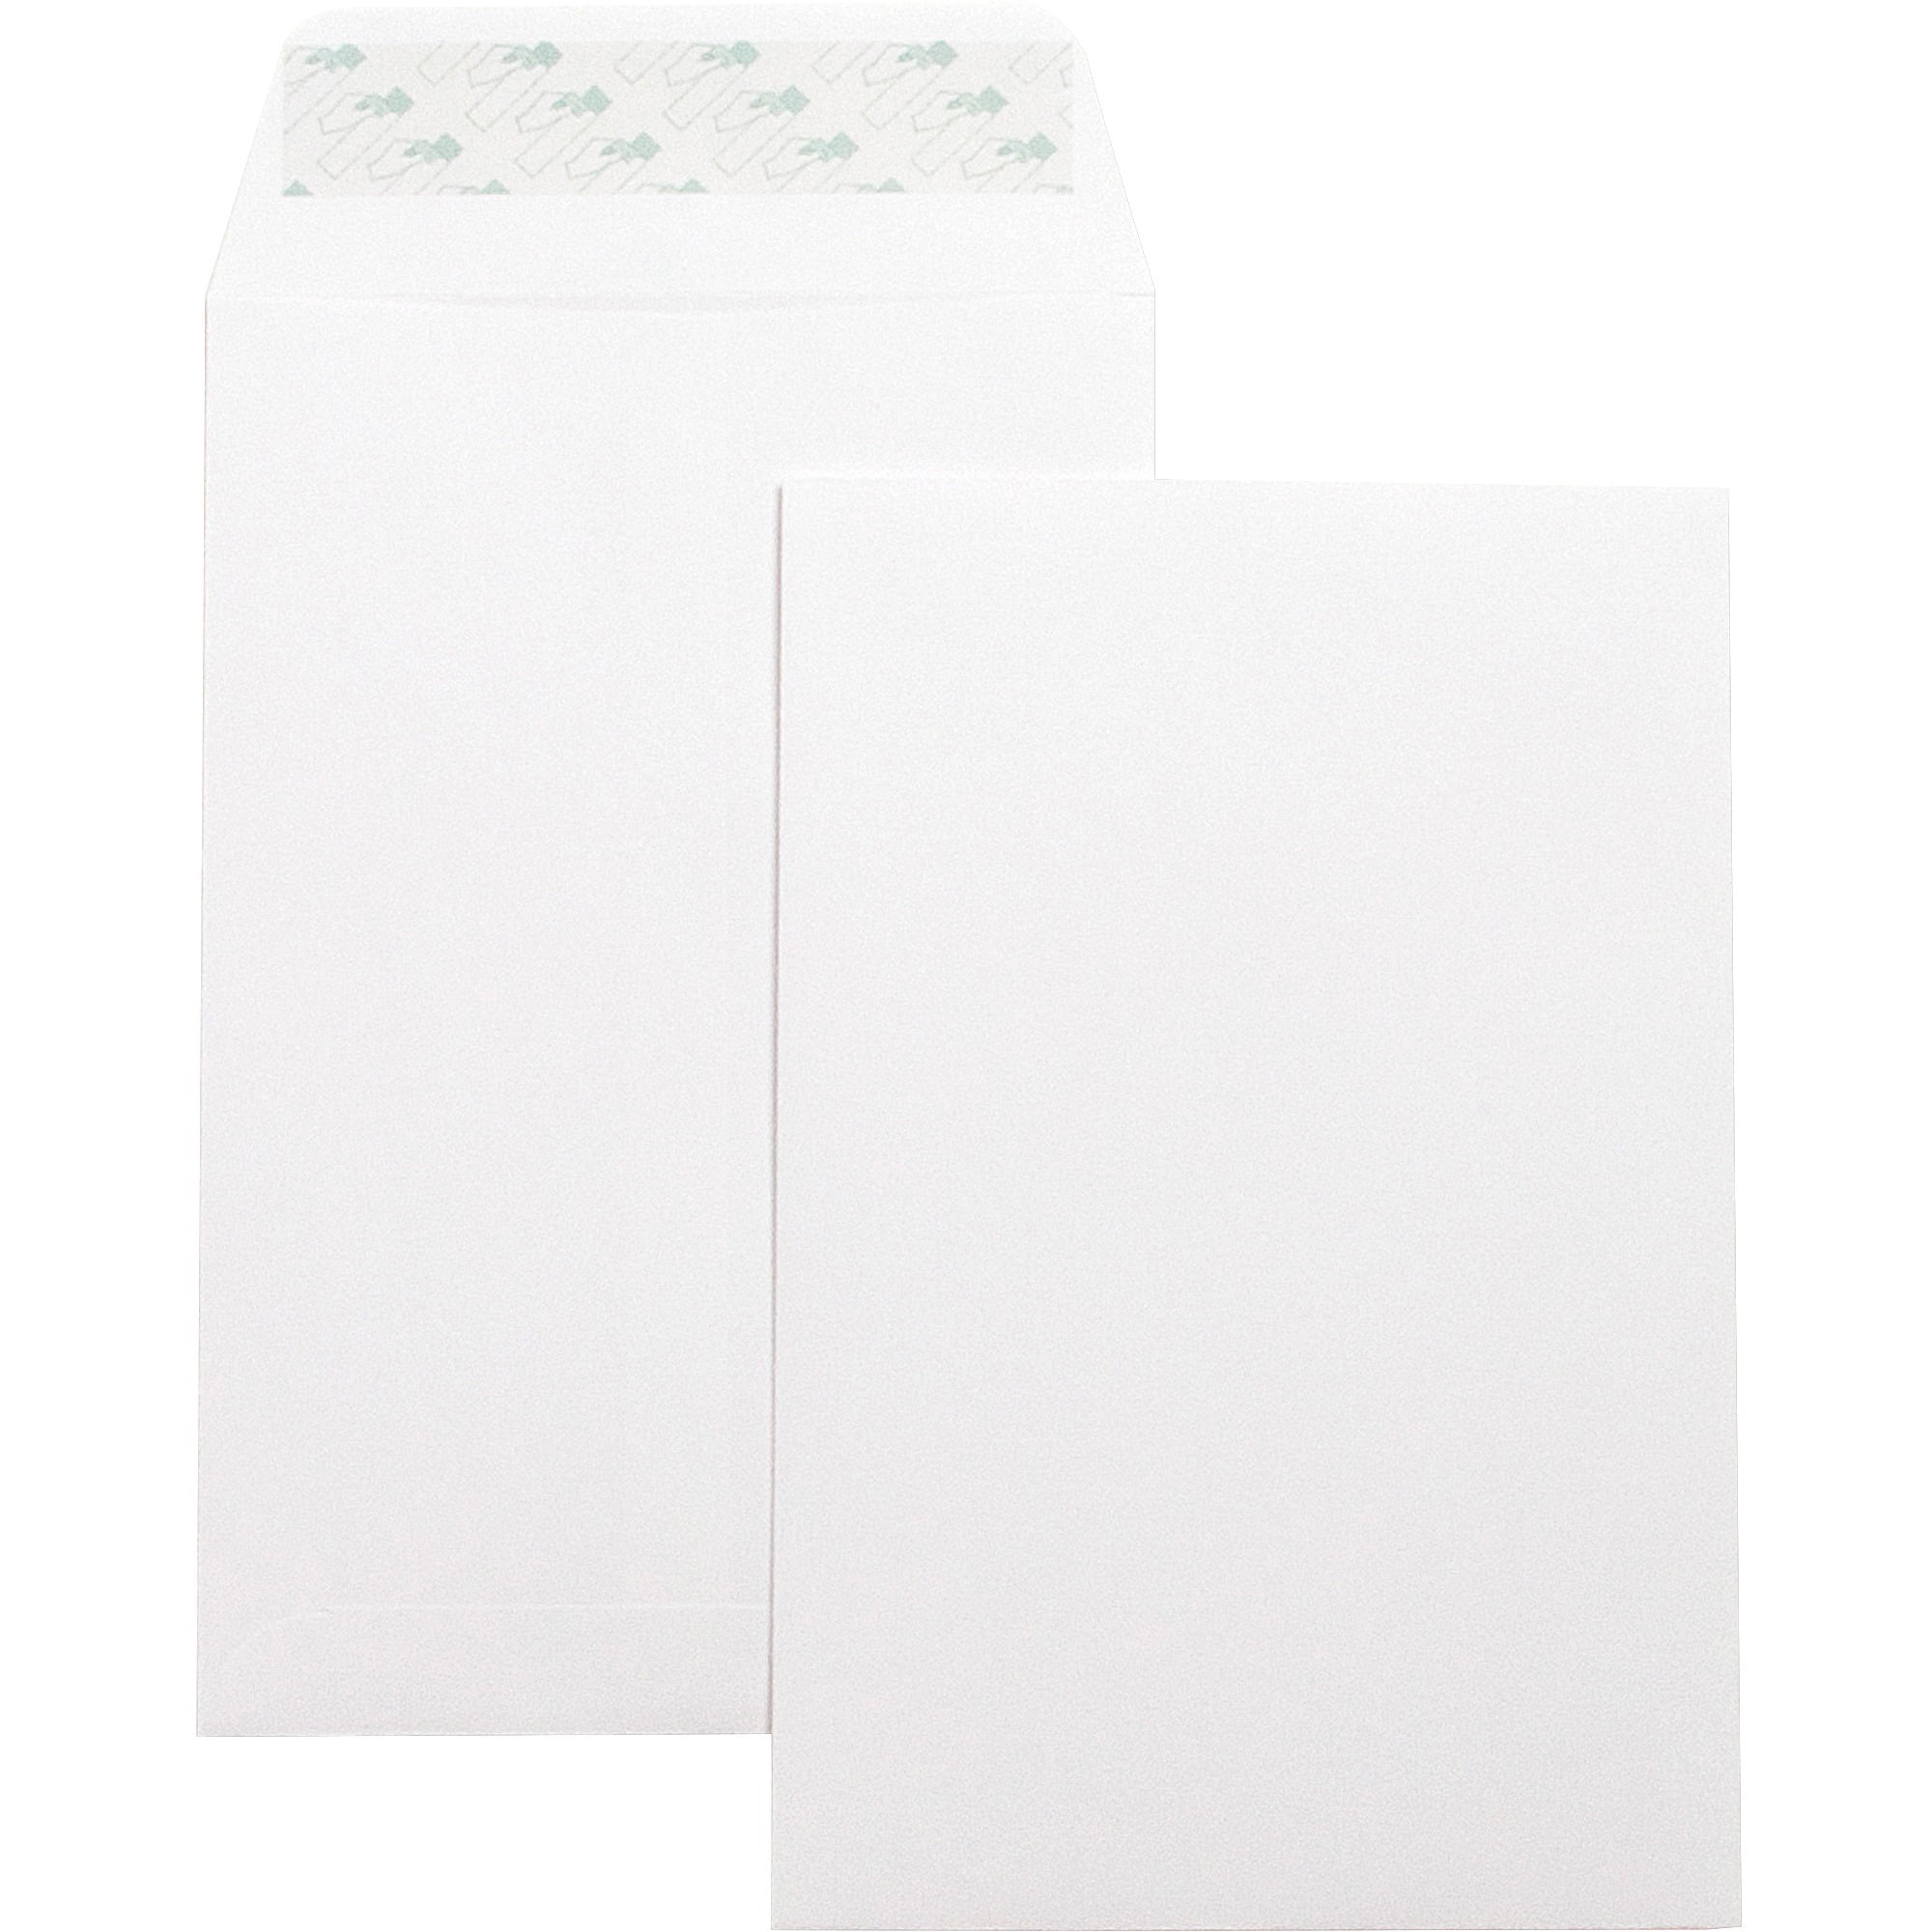 Redi-Strip 100 per box White 44182 Catalog Envelope Quality Park 6x9 